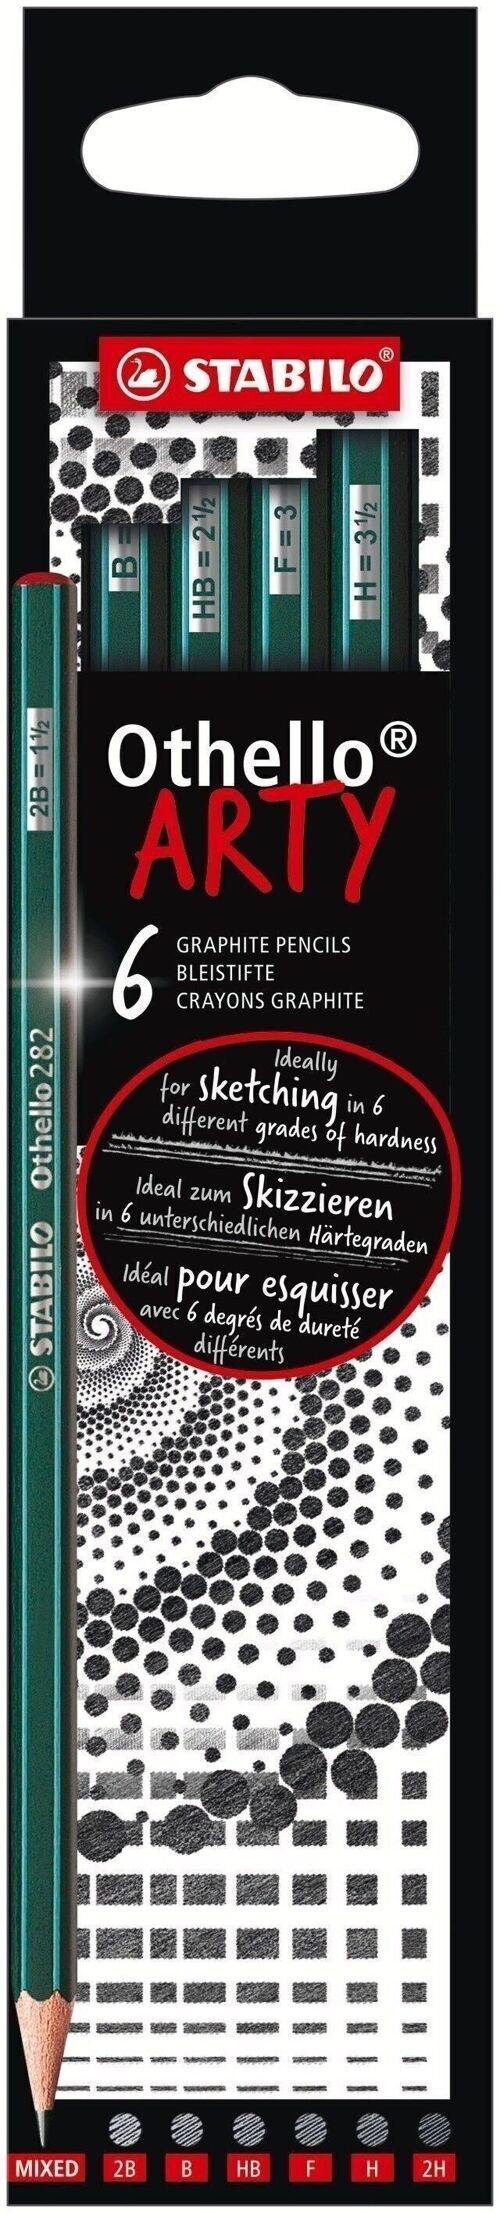 Crayons graphite - Etui carton x 6 STABILO Othello ARTY assortiment de mines dures et tendres (2B, B, HB, F, H, 2H)